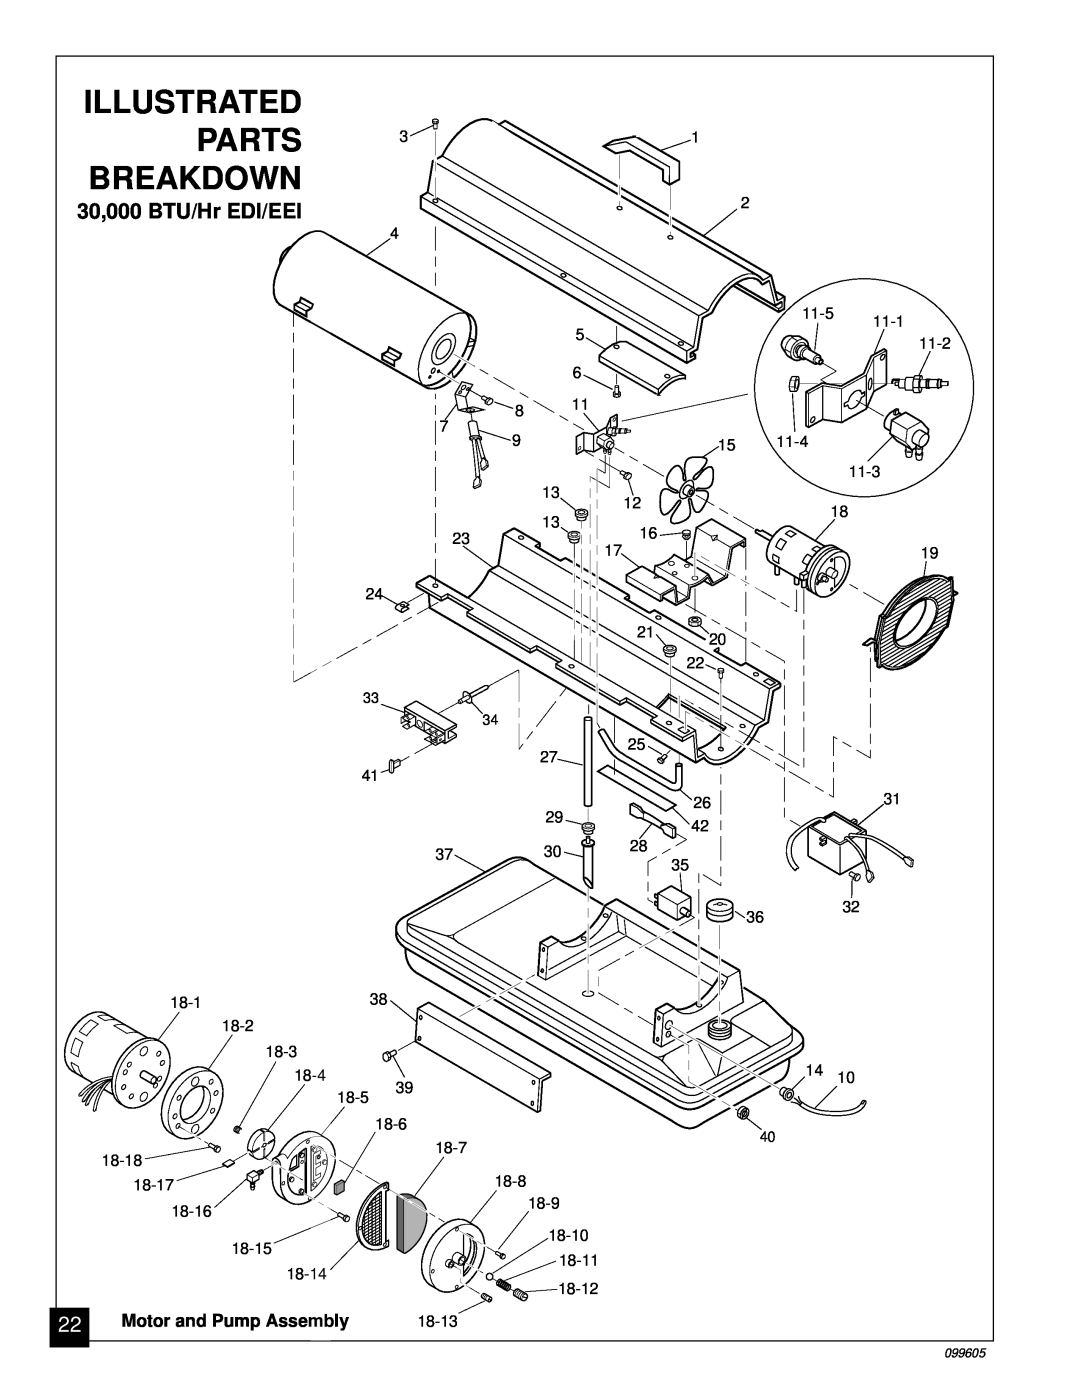 Desa H.S.I. Series owner manual Parts, Breakdown, Illustrated, 30,000 BTU/Hr EDI/EEI, Motor and Pump Assembly 